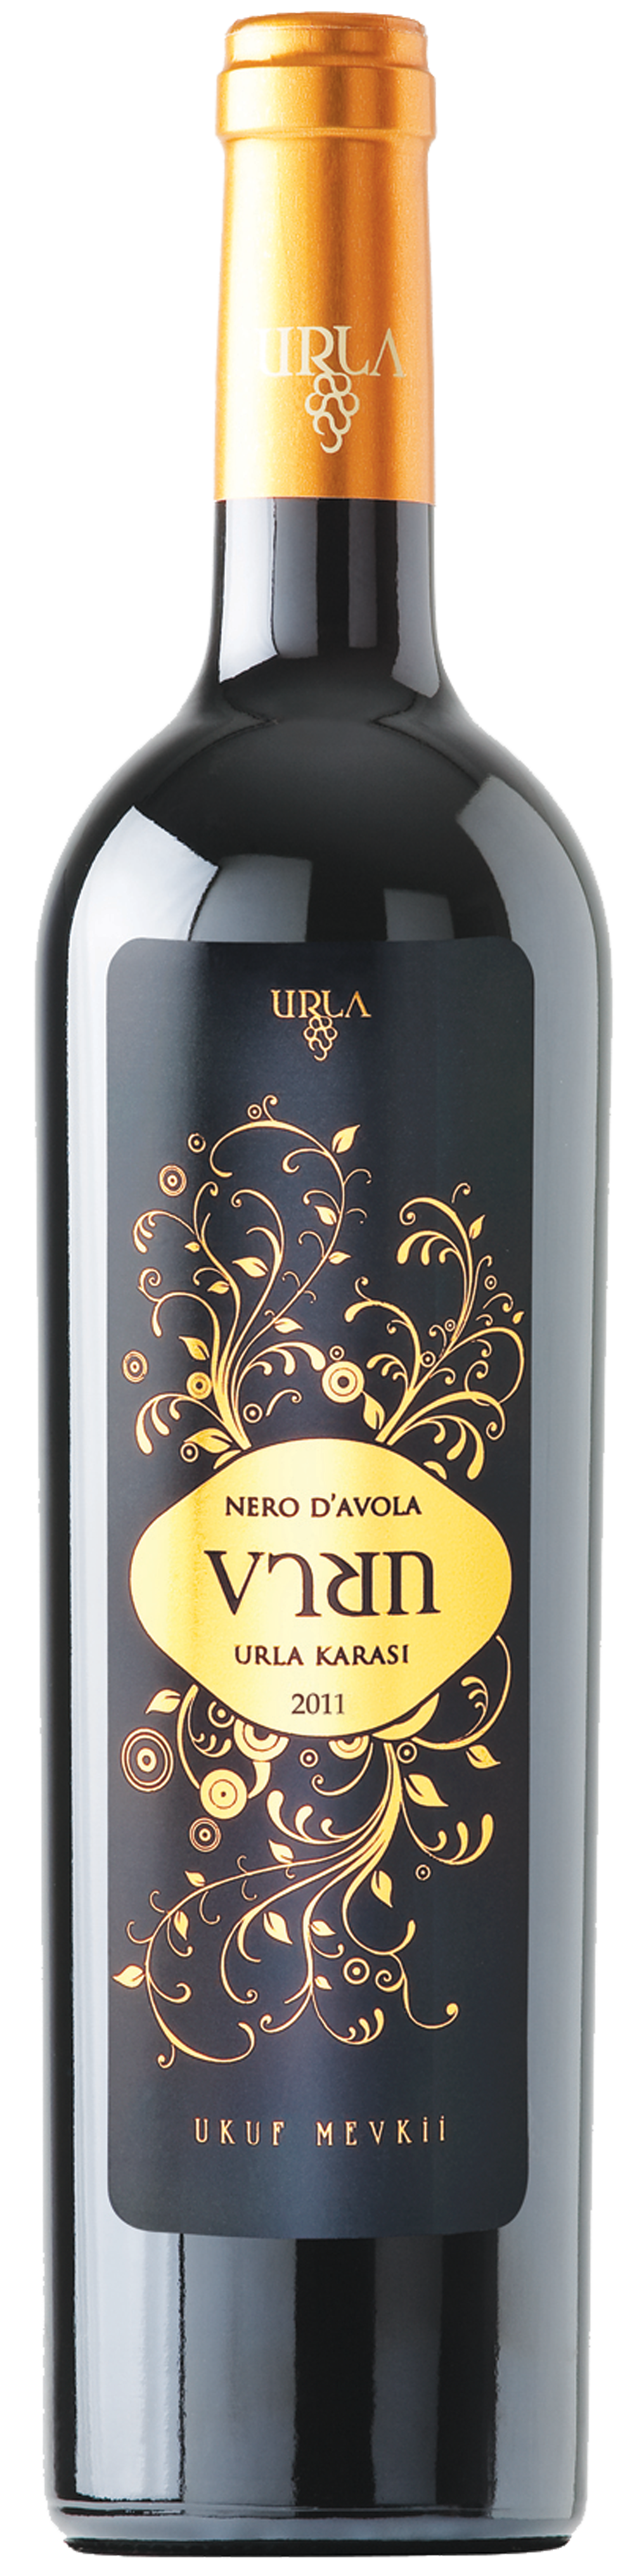 Bottle shot of 2012 Nero d'Avola & Urla Karasi